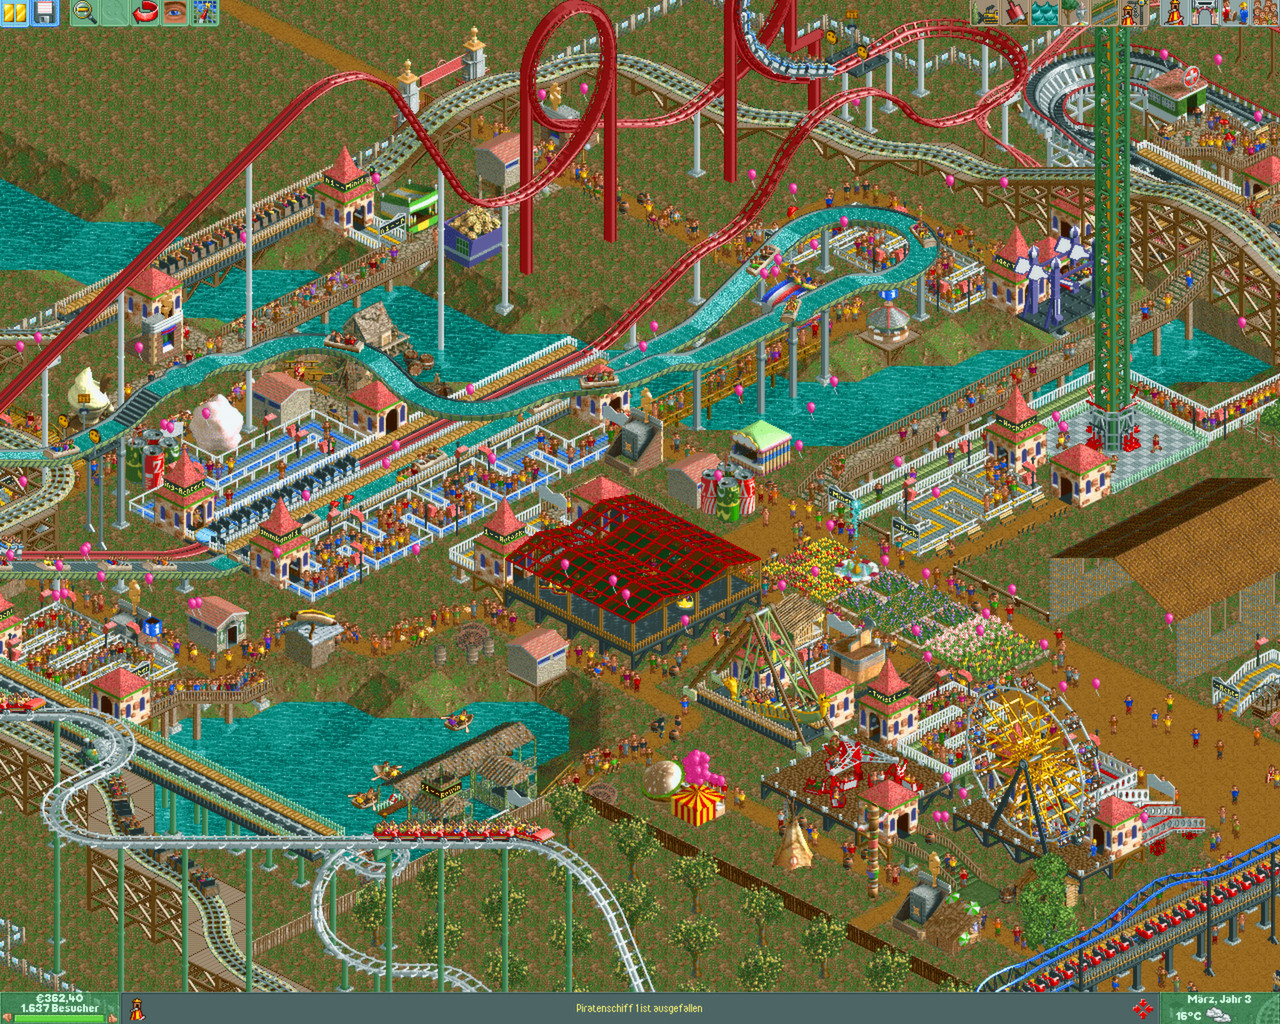 roller coaster tycoon 2 full version